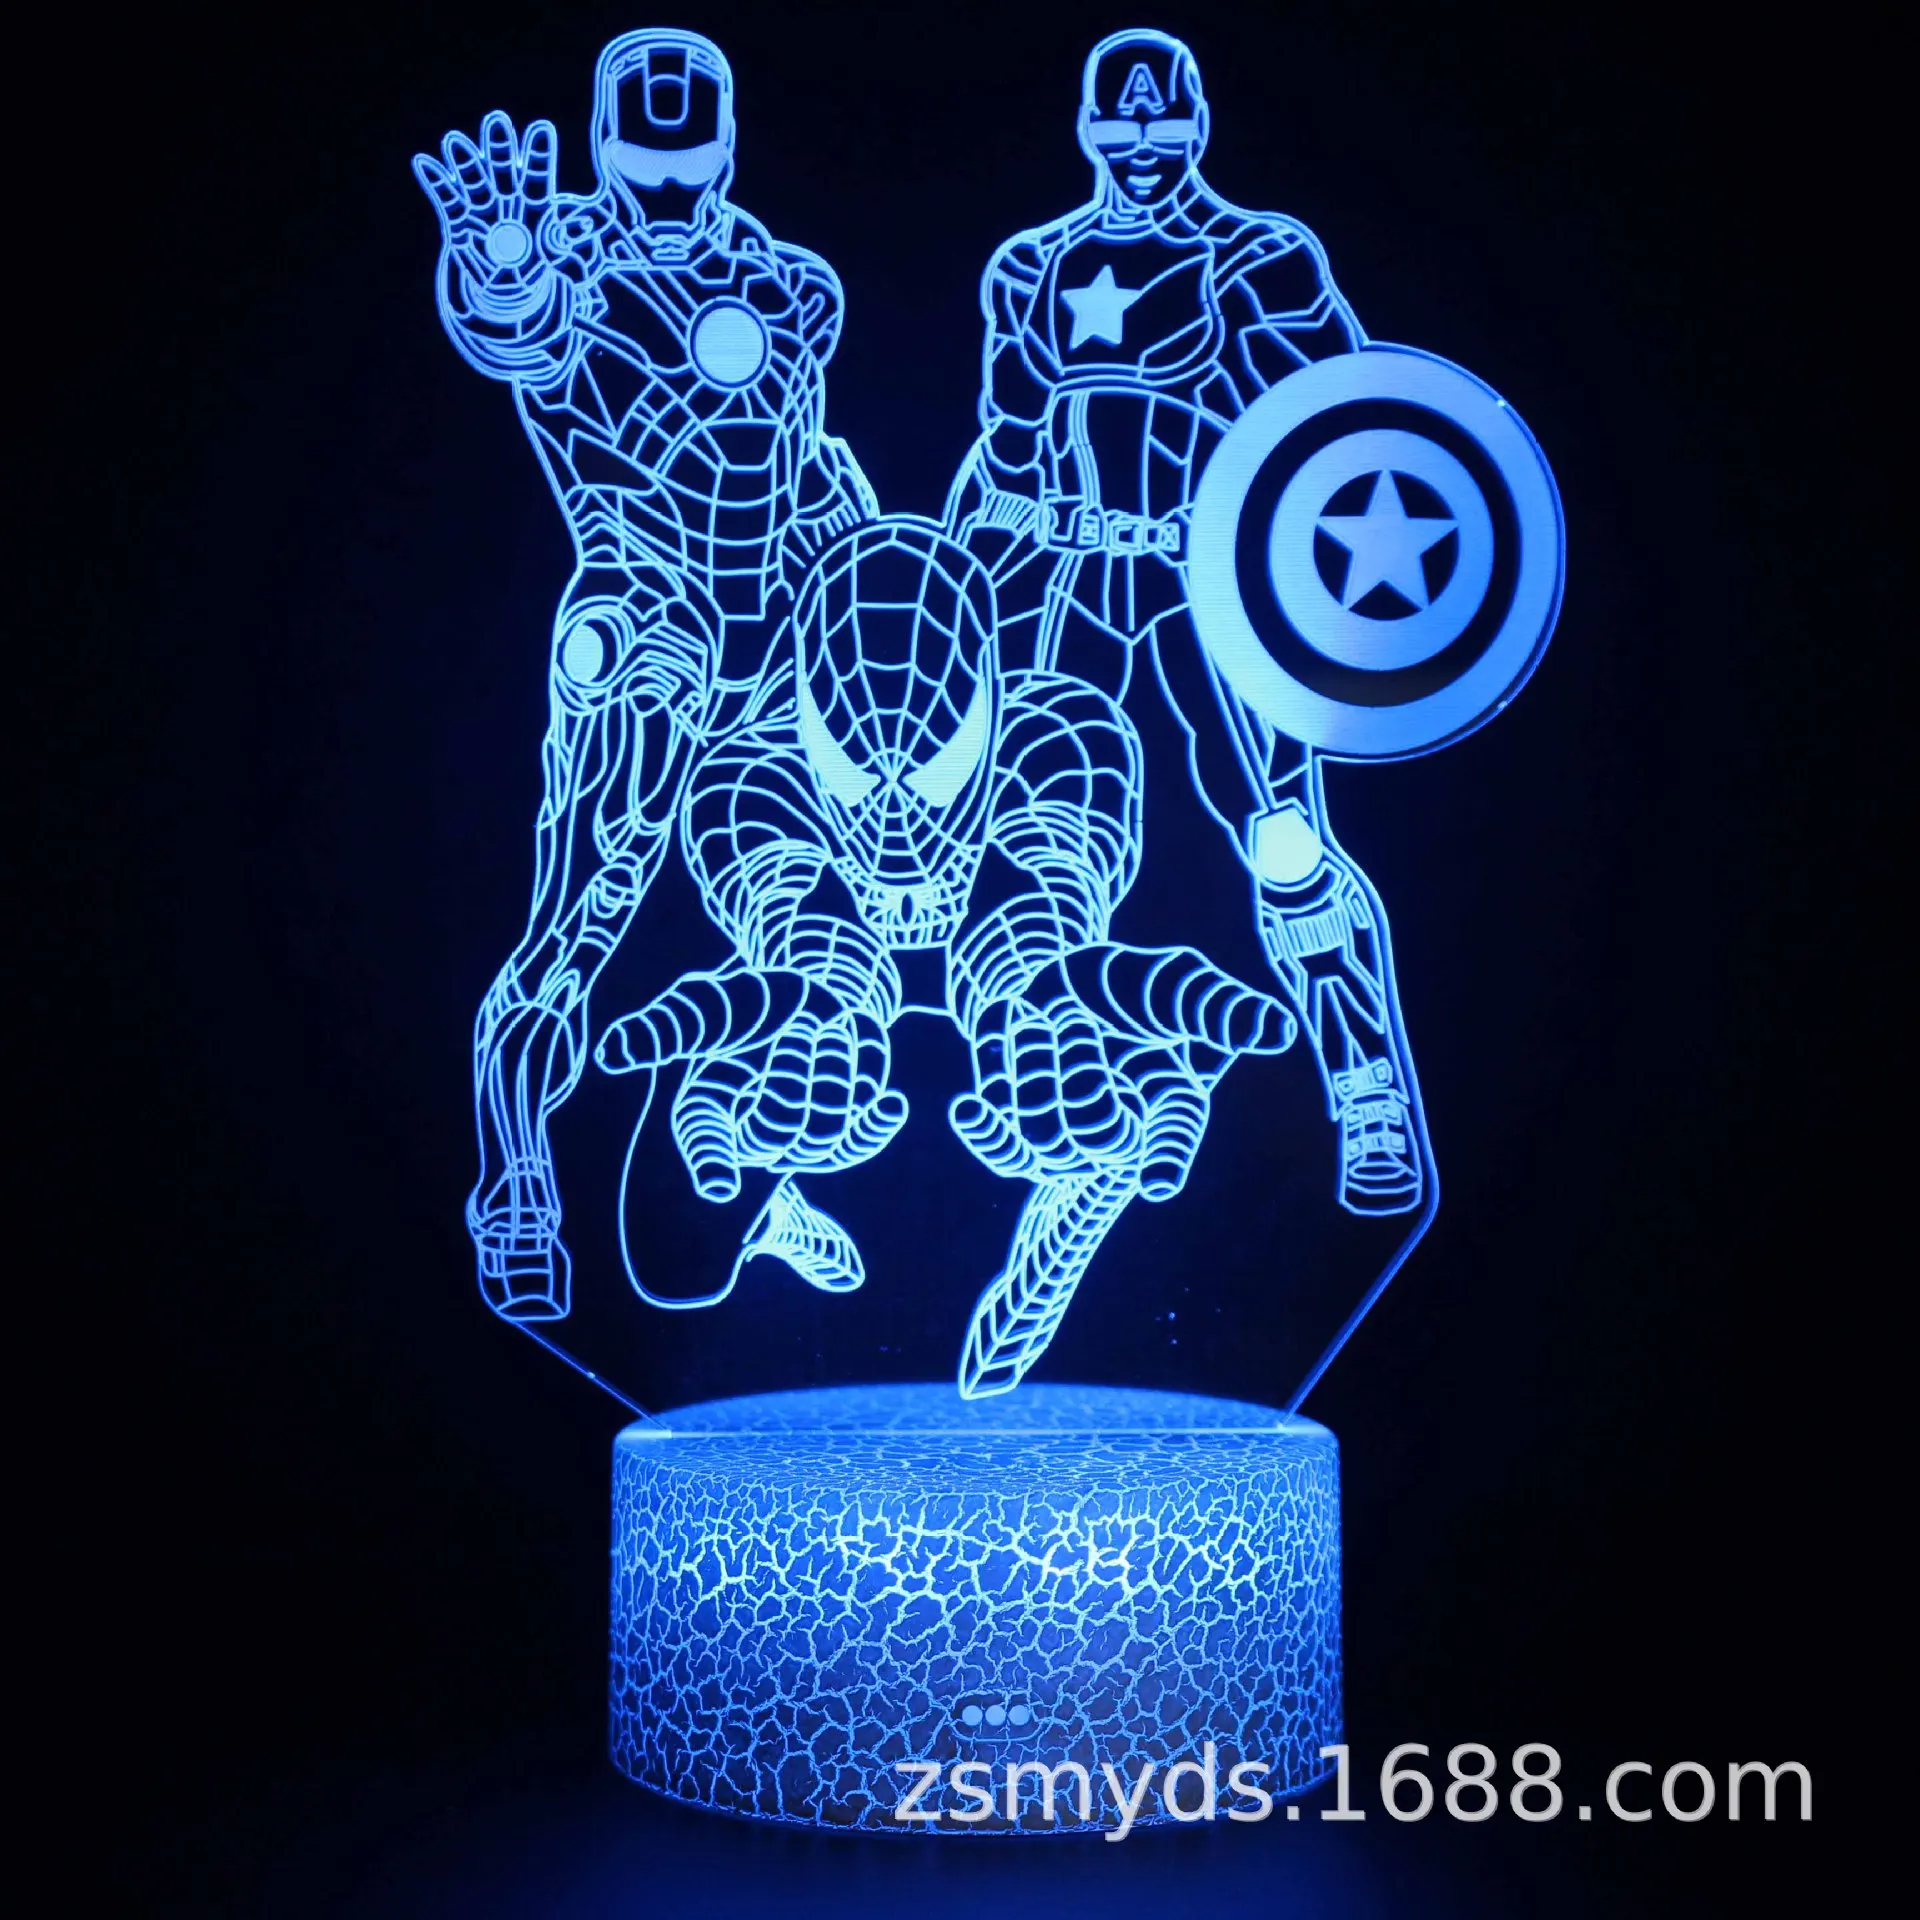 

Disney Avengers Captain-America Series Super-Heros 3D Nightlight USB Touch Table Lamp Bedside Lamp Room Decoration Nightlight